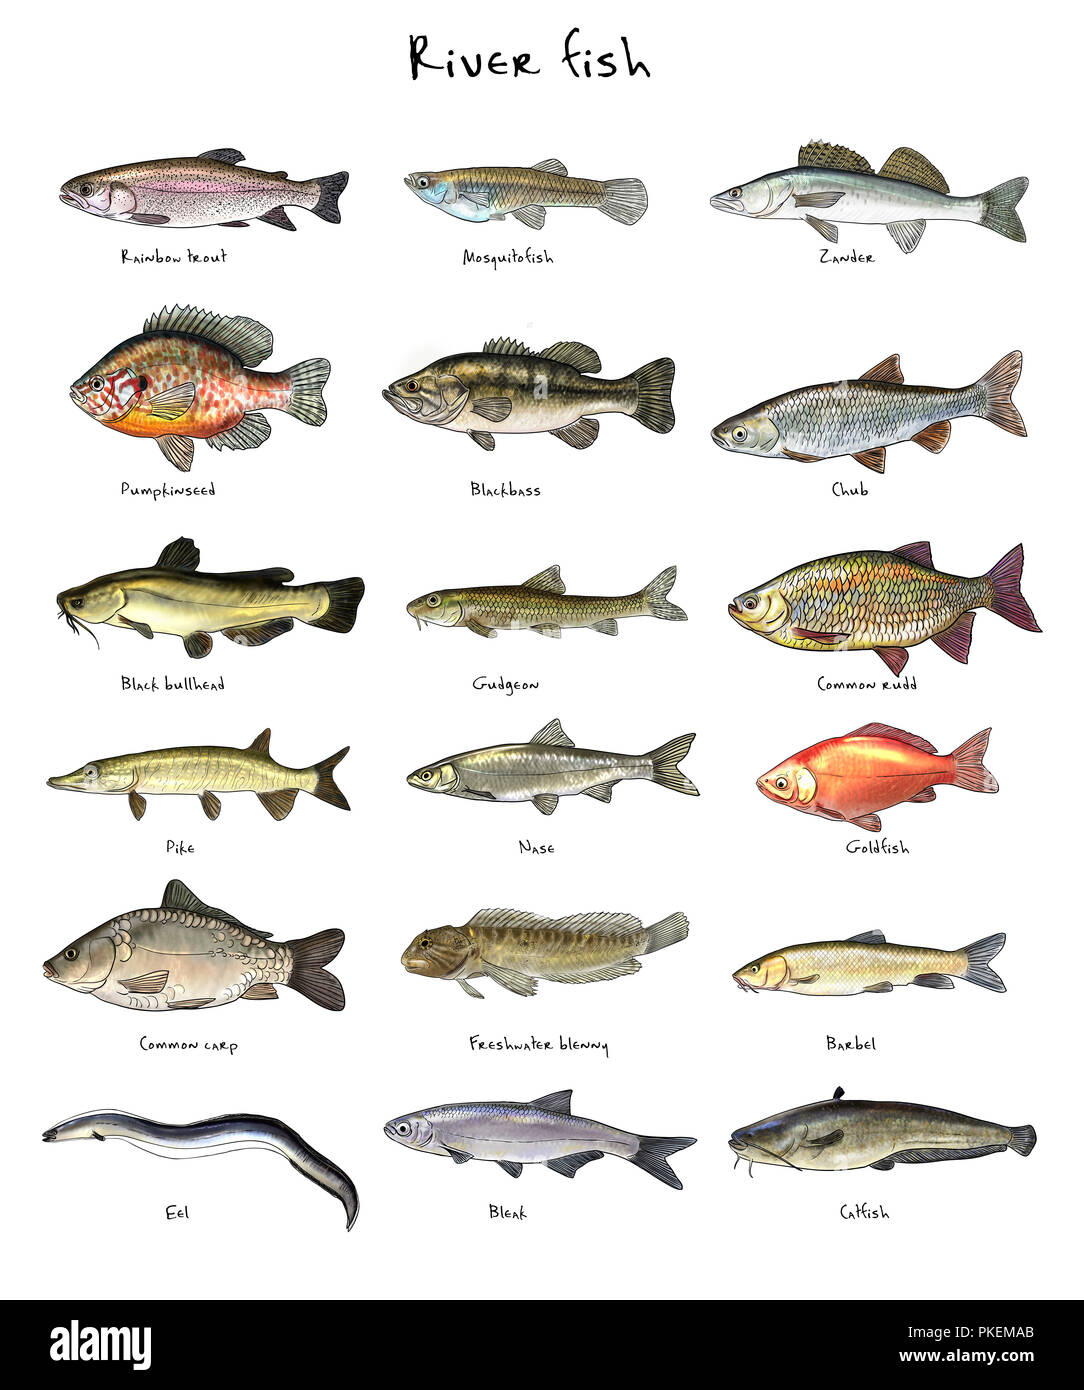 Digital illustration of river fish Stock Photo